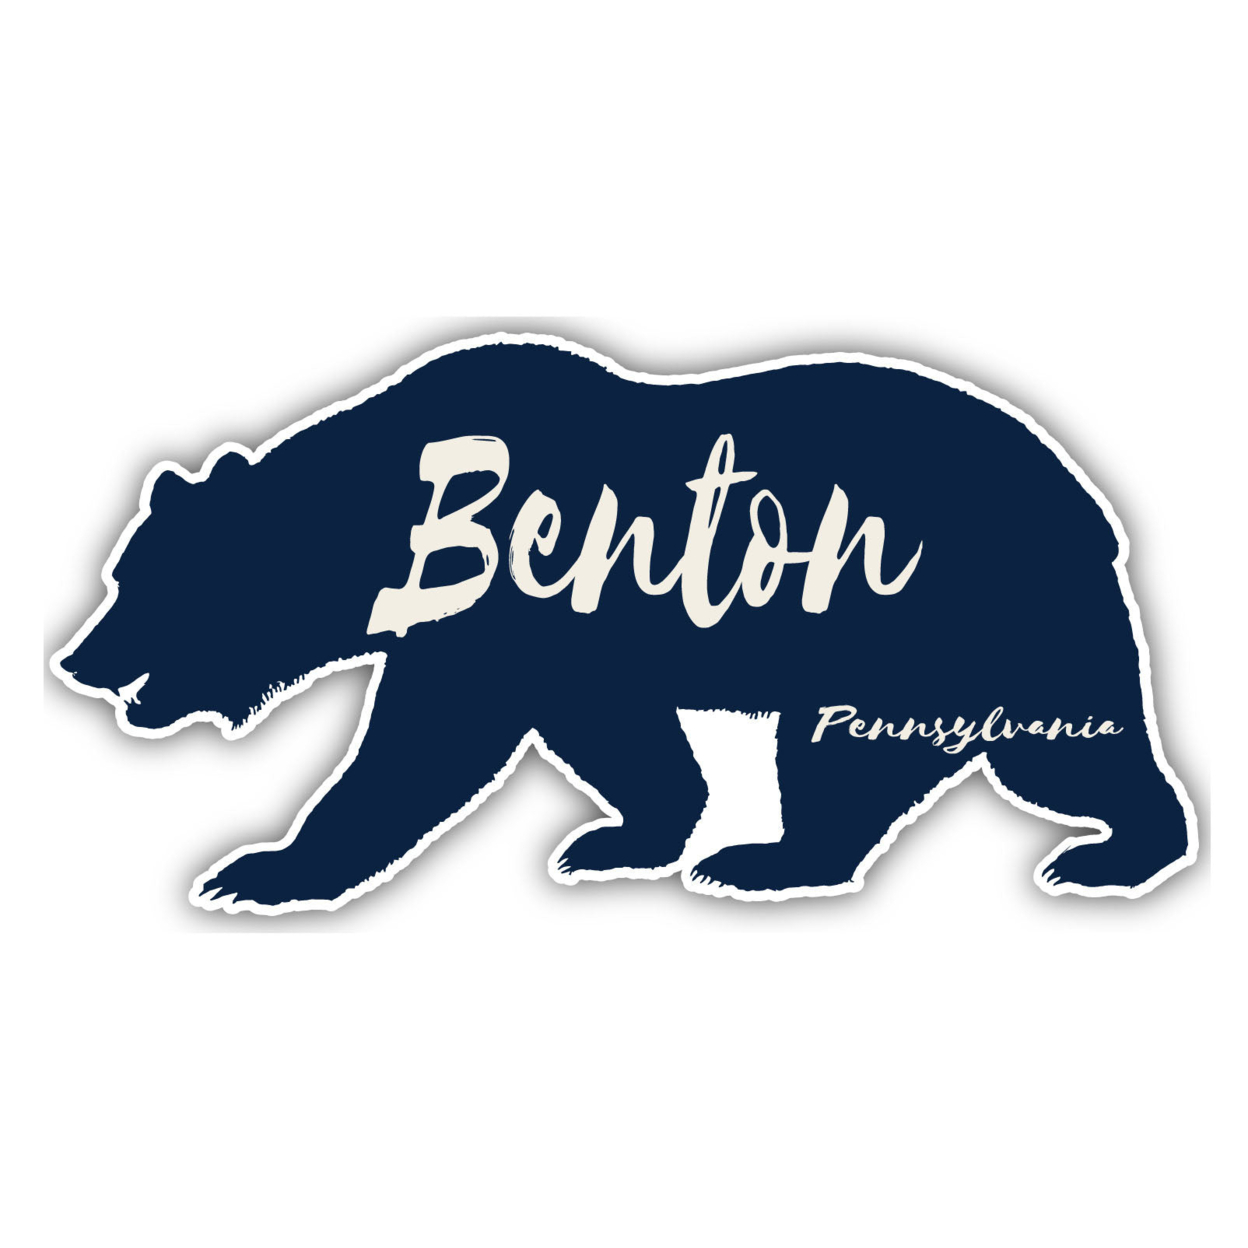 Benton Pennsylvania Souvenir Decorative Stickers (Choose Theme And Size) - 4-Pack, 10-Inch, Bear